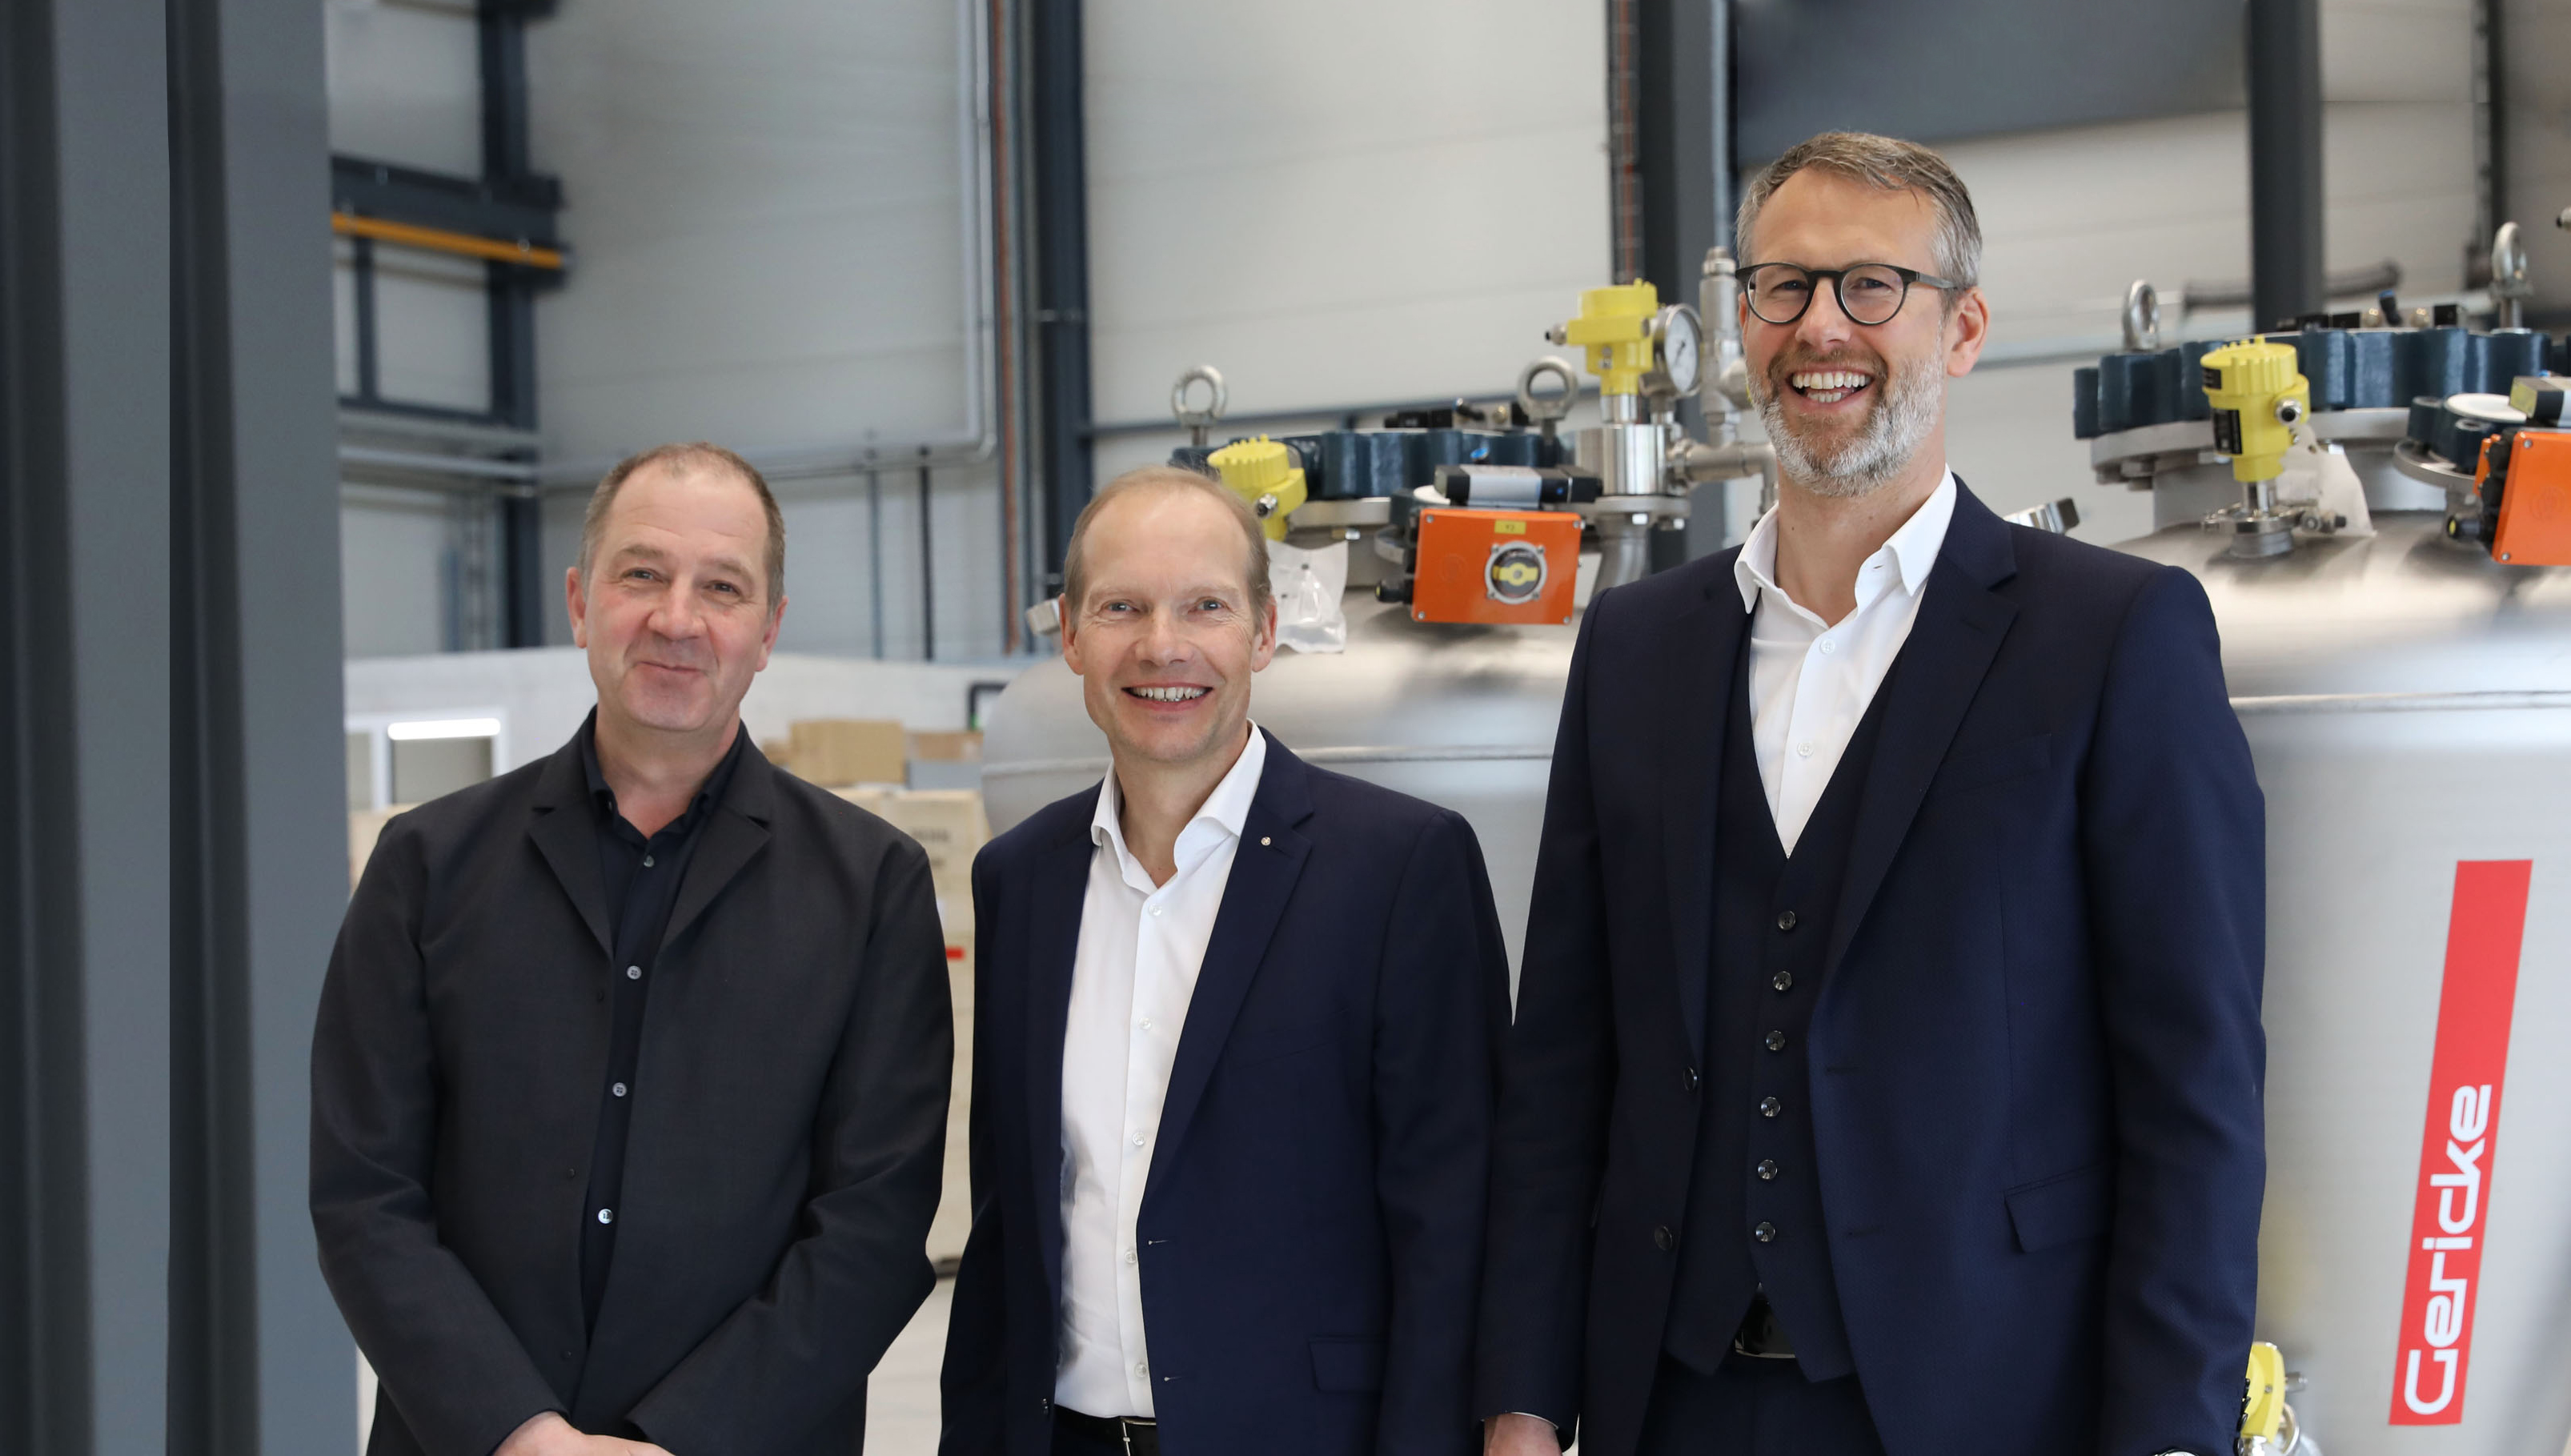 Da sinistra a destra: Dr. Ralf Weinekötter (Direttore Gericke AG) | Markus H. Gericke (Direttore Generale Gruppo Gericke) | Thomas Schlumpf (Direttore Finanziario Gruppo Gericke)